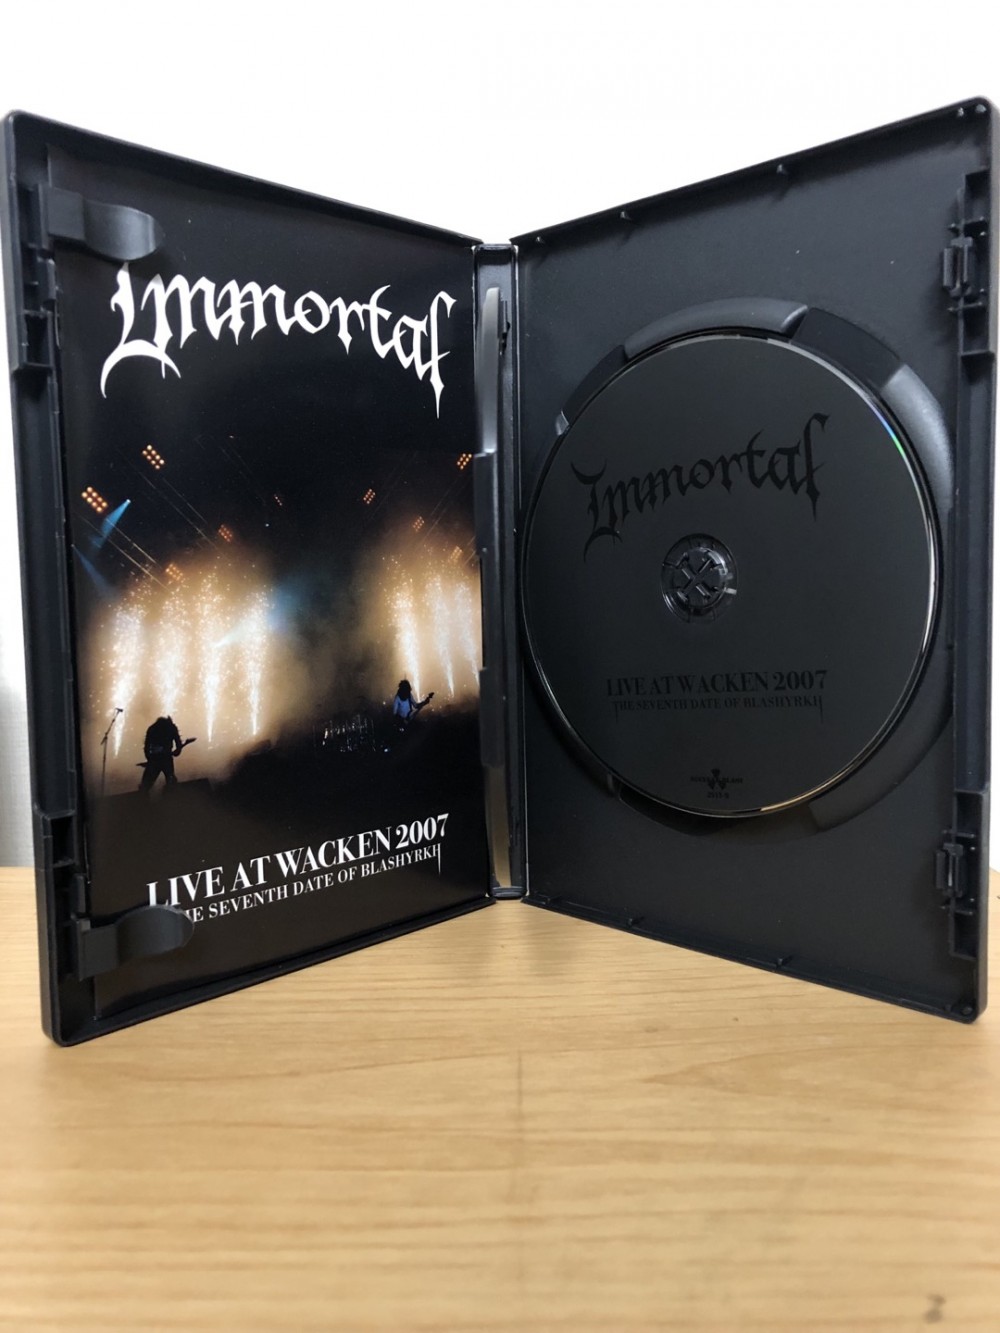 Immortal - The Seventh Date of Blashyrkh CD, DVD Photo